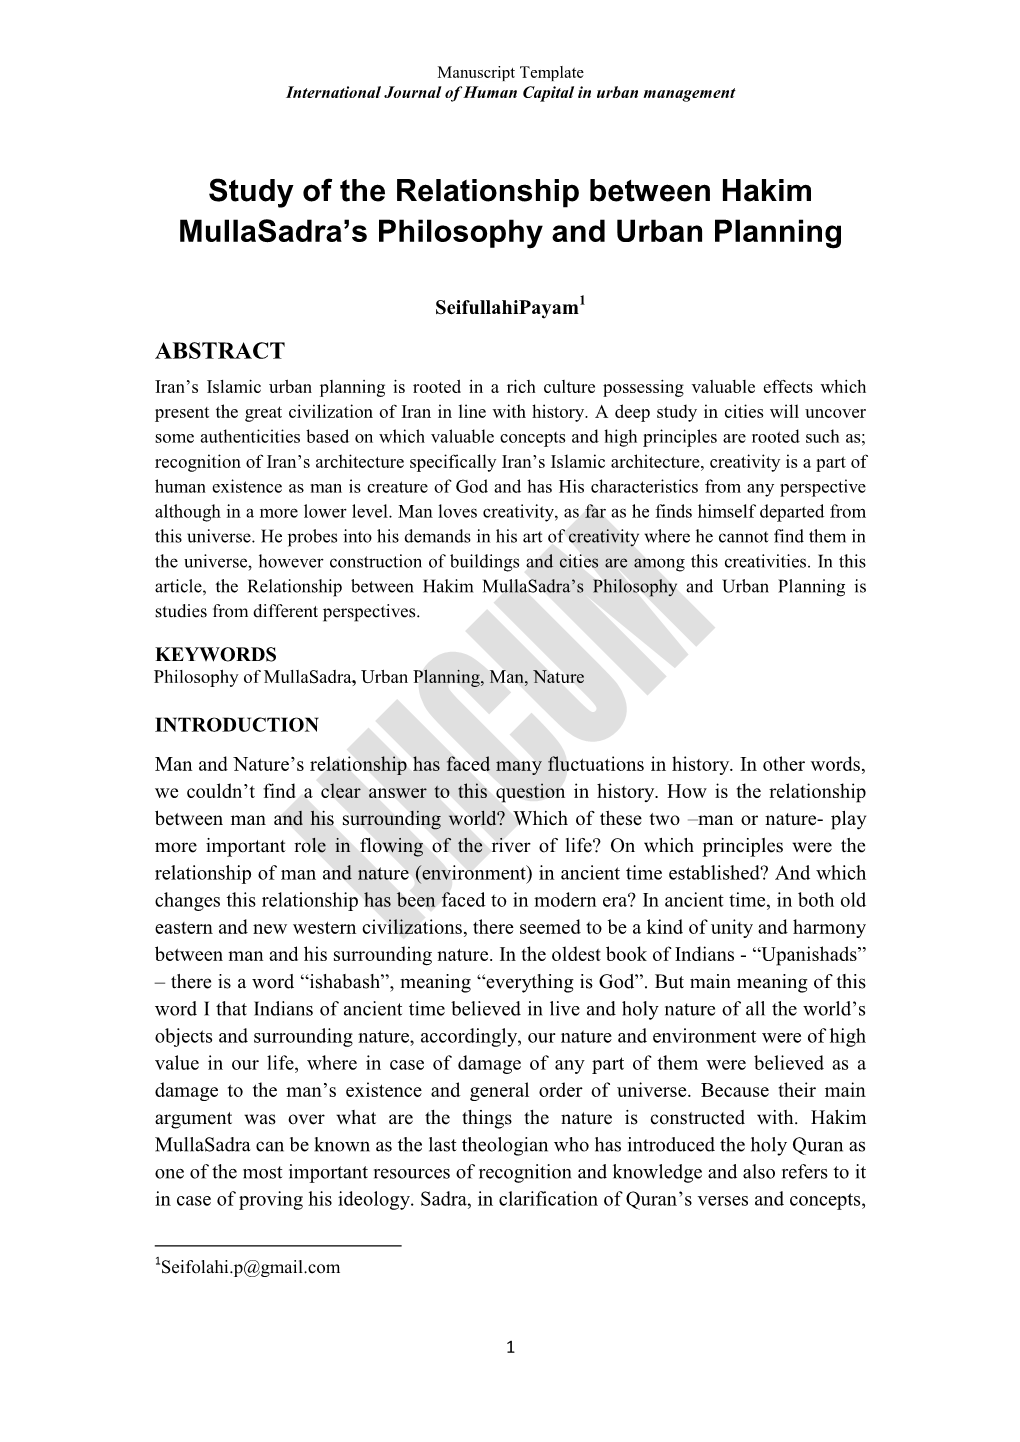 Study of the Relationship Between Hakim Mullasadra's Philosophy